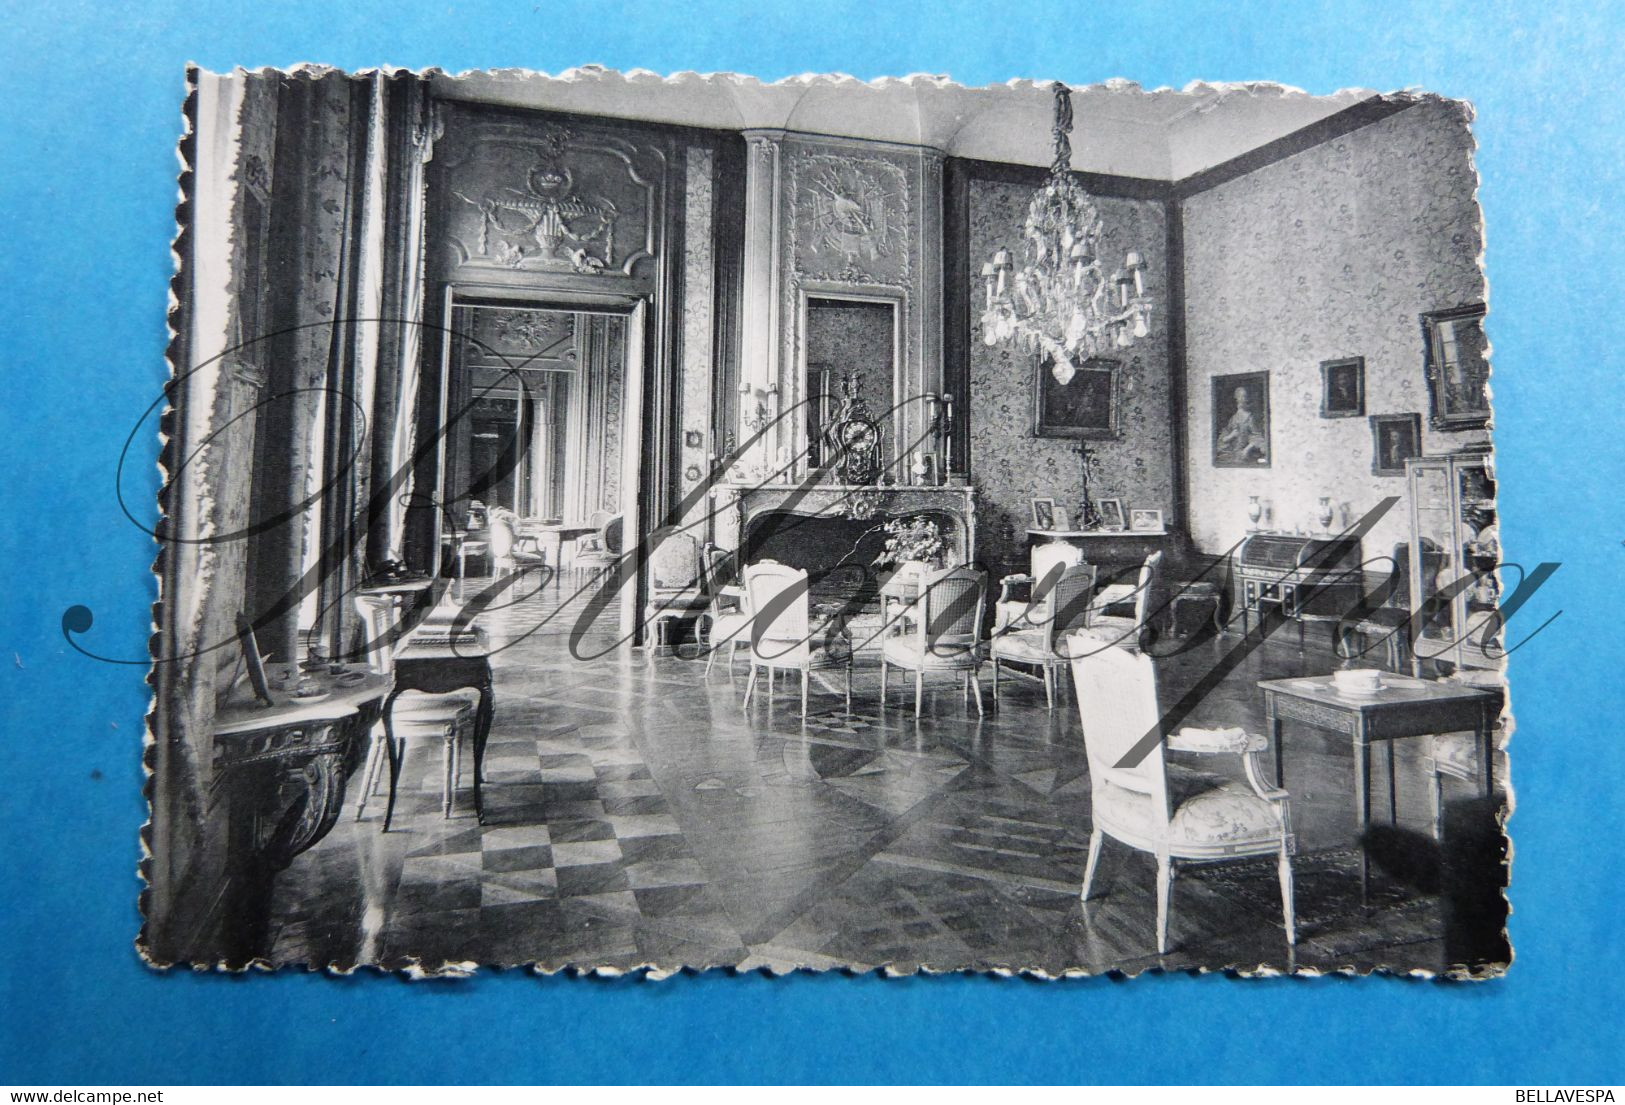 Bruggelette Chateau d'Attre . Kasteel van Attre lot  x 15 postcards- cartes postales- Mint